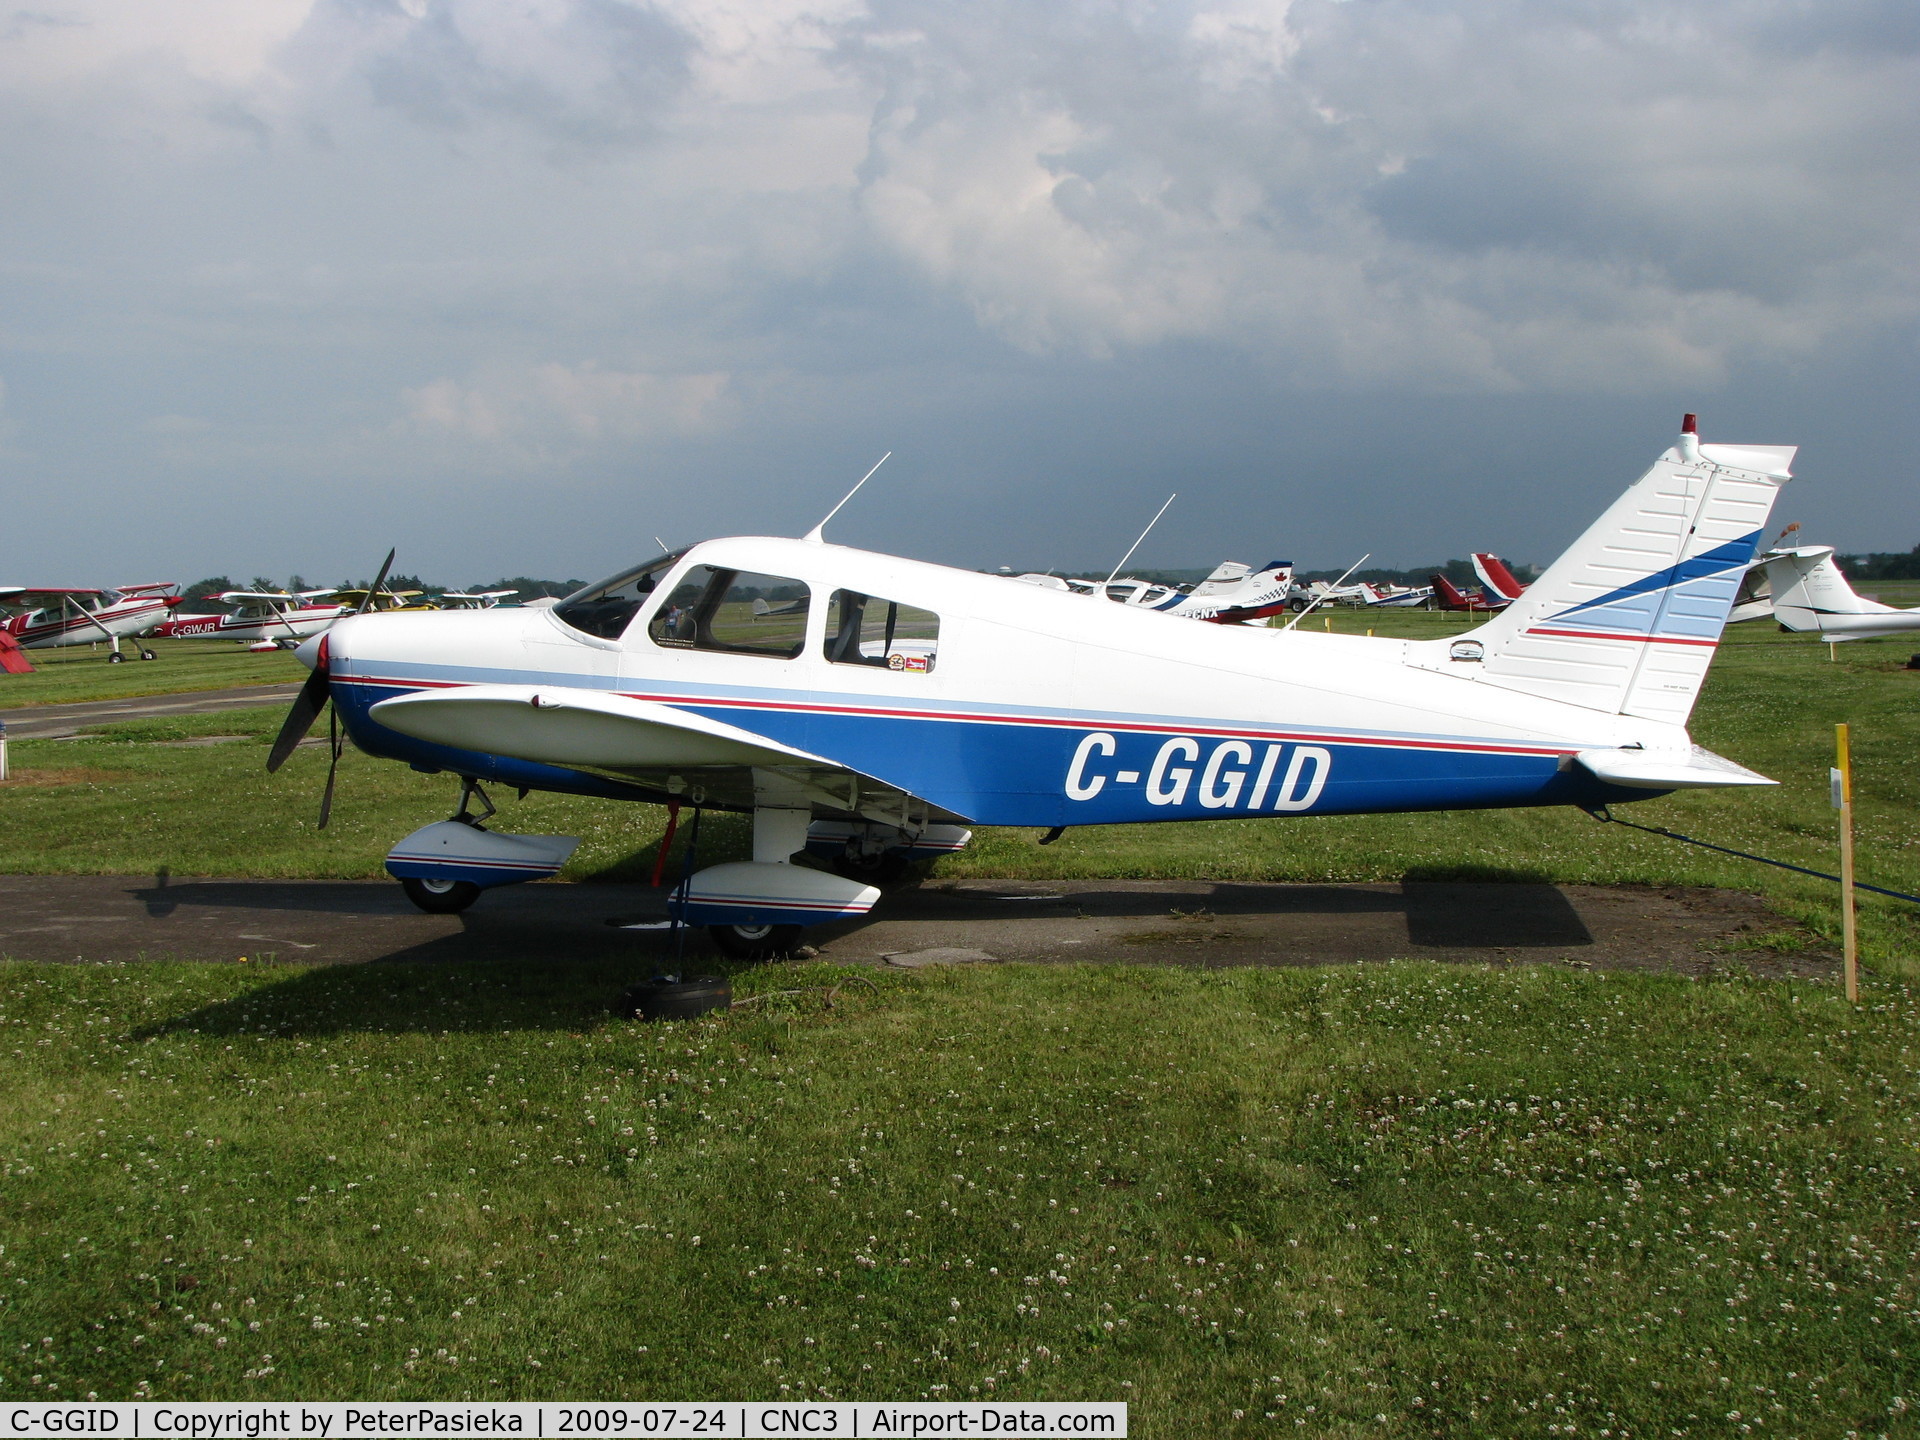 C-GGID, 1975 Piper PA-28-140 Cruiser C/N 28-7525302, @ Brampton Airport